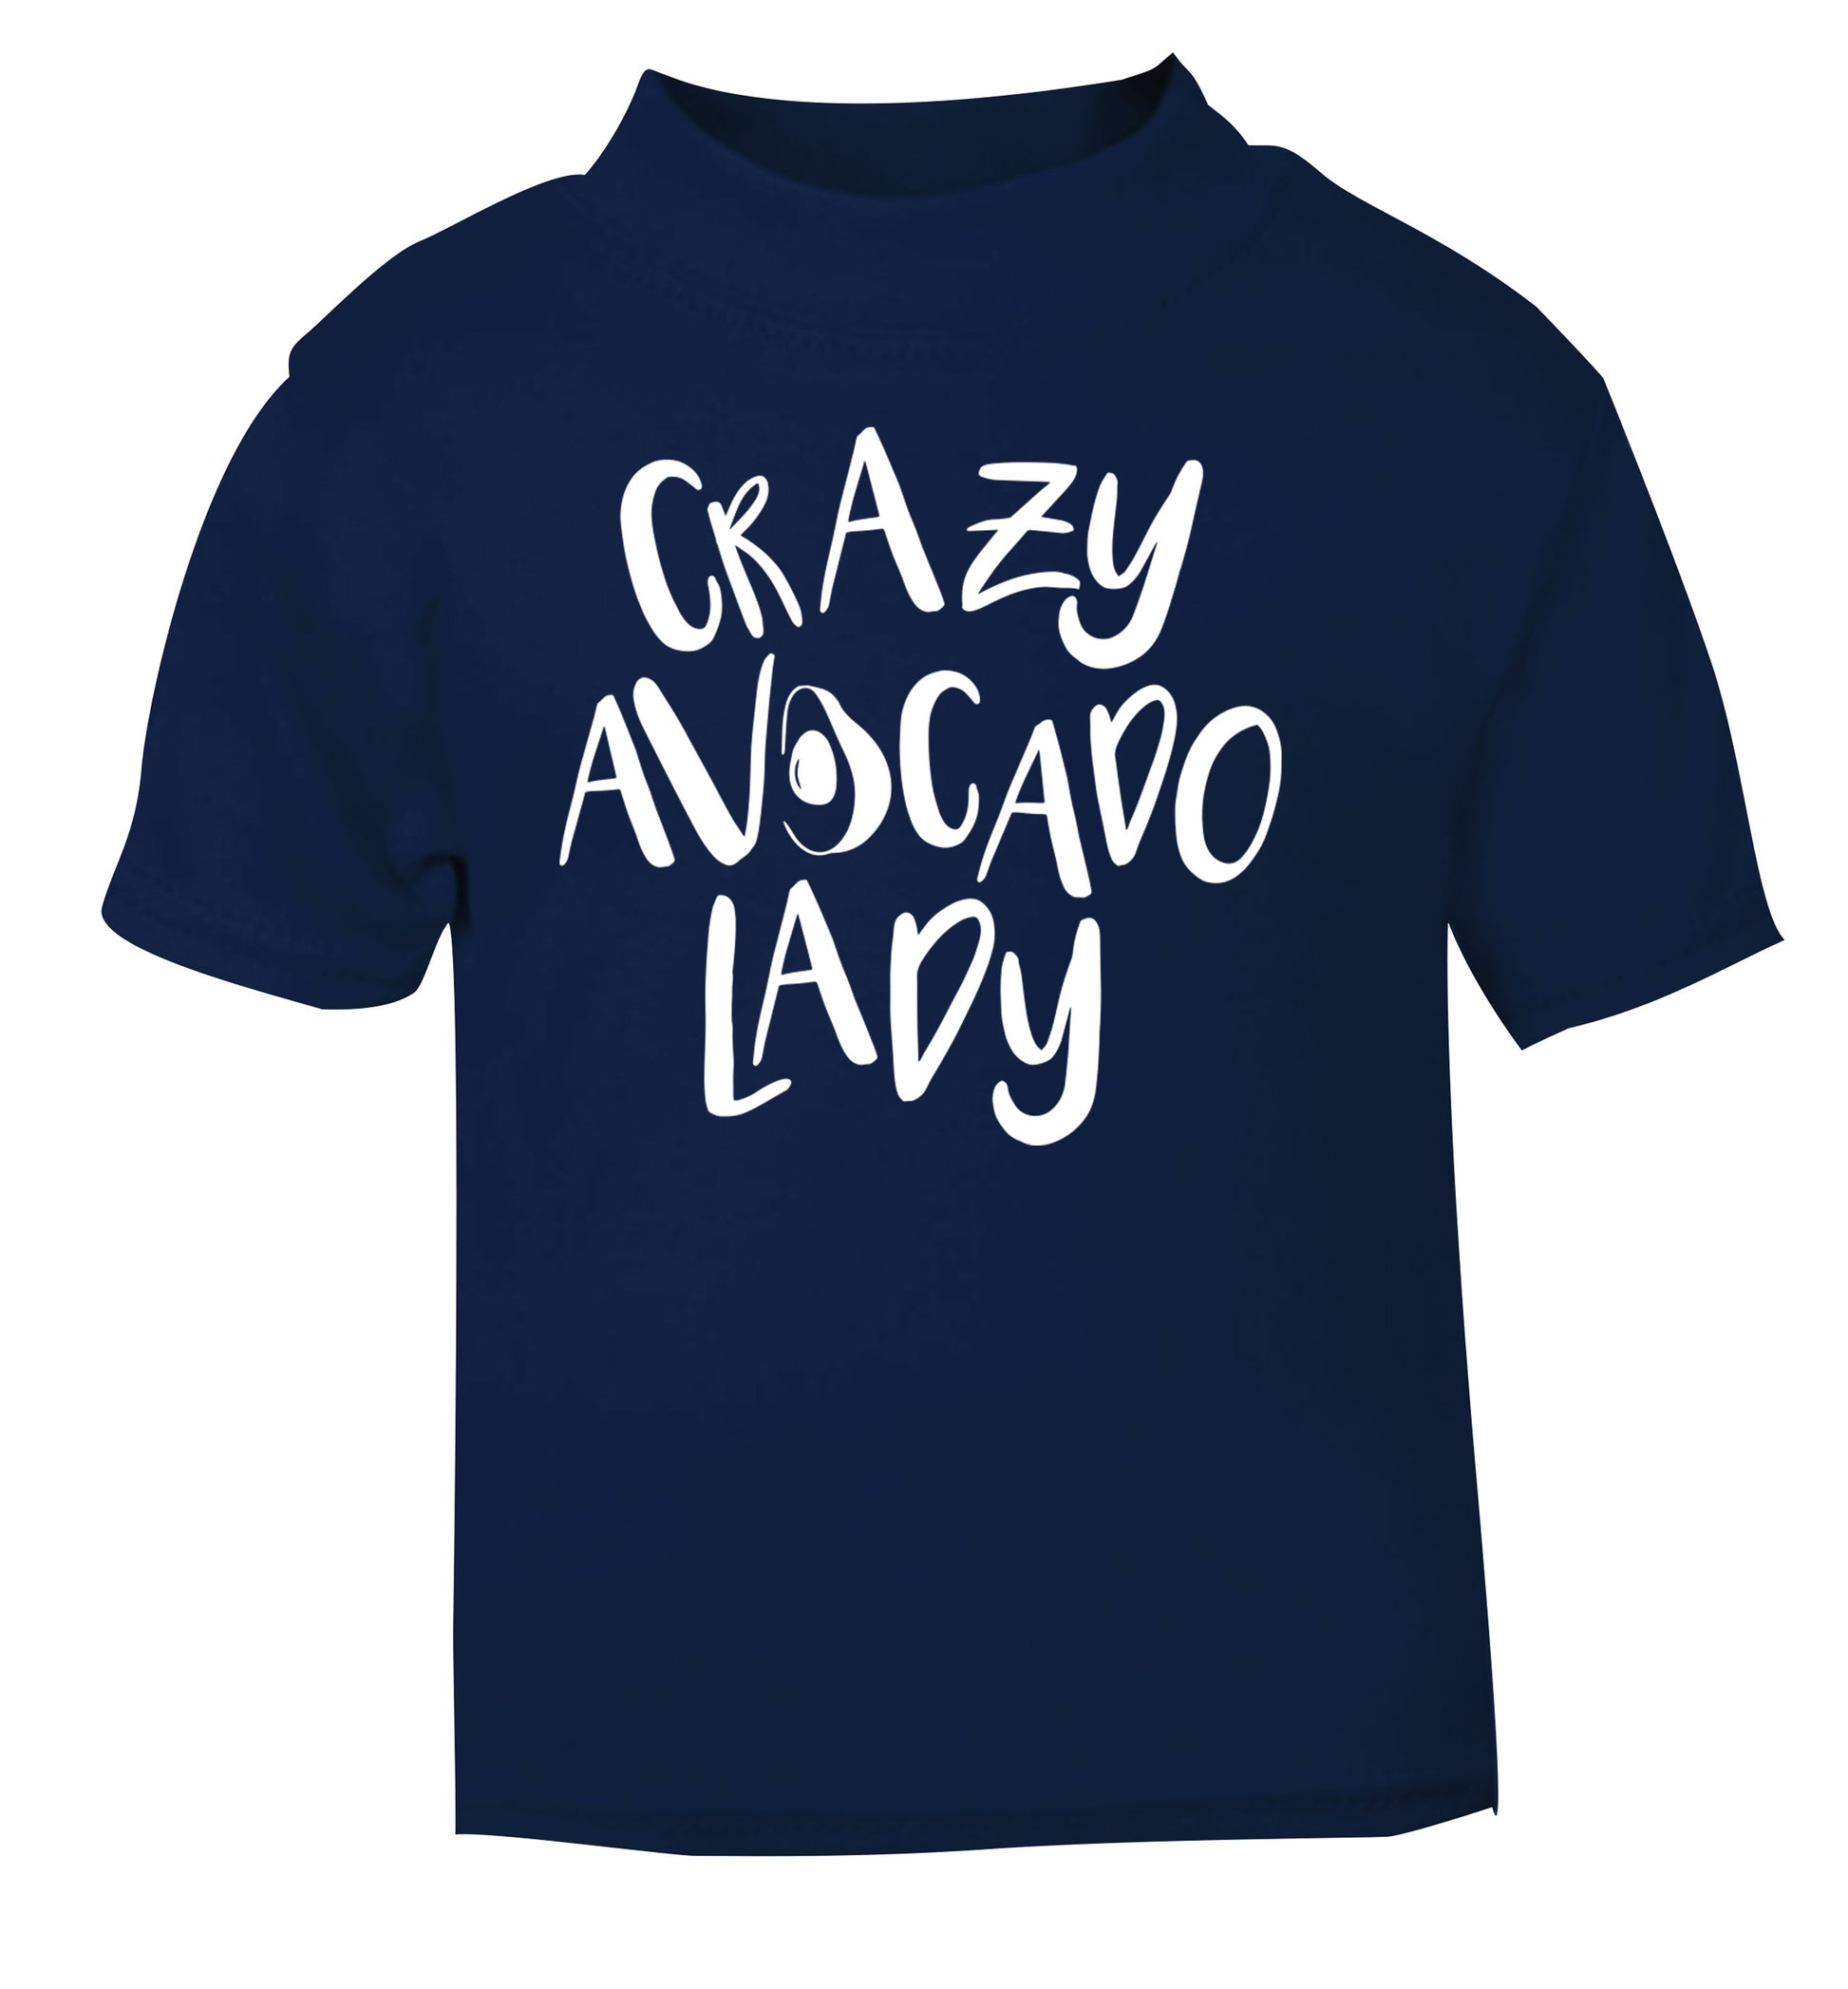 Crazy avocado lady navy Baby Toddler Tshirt 2 Years